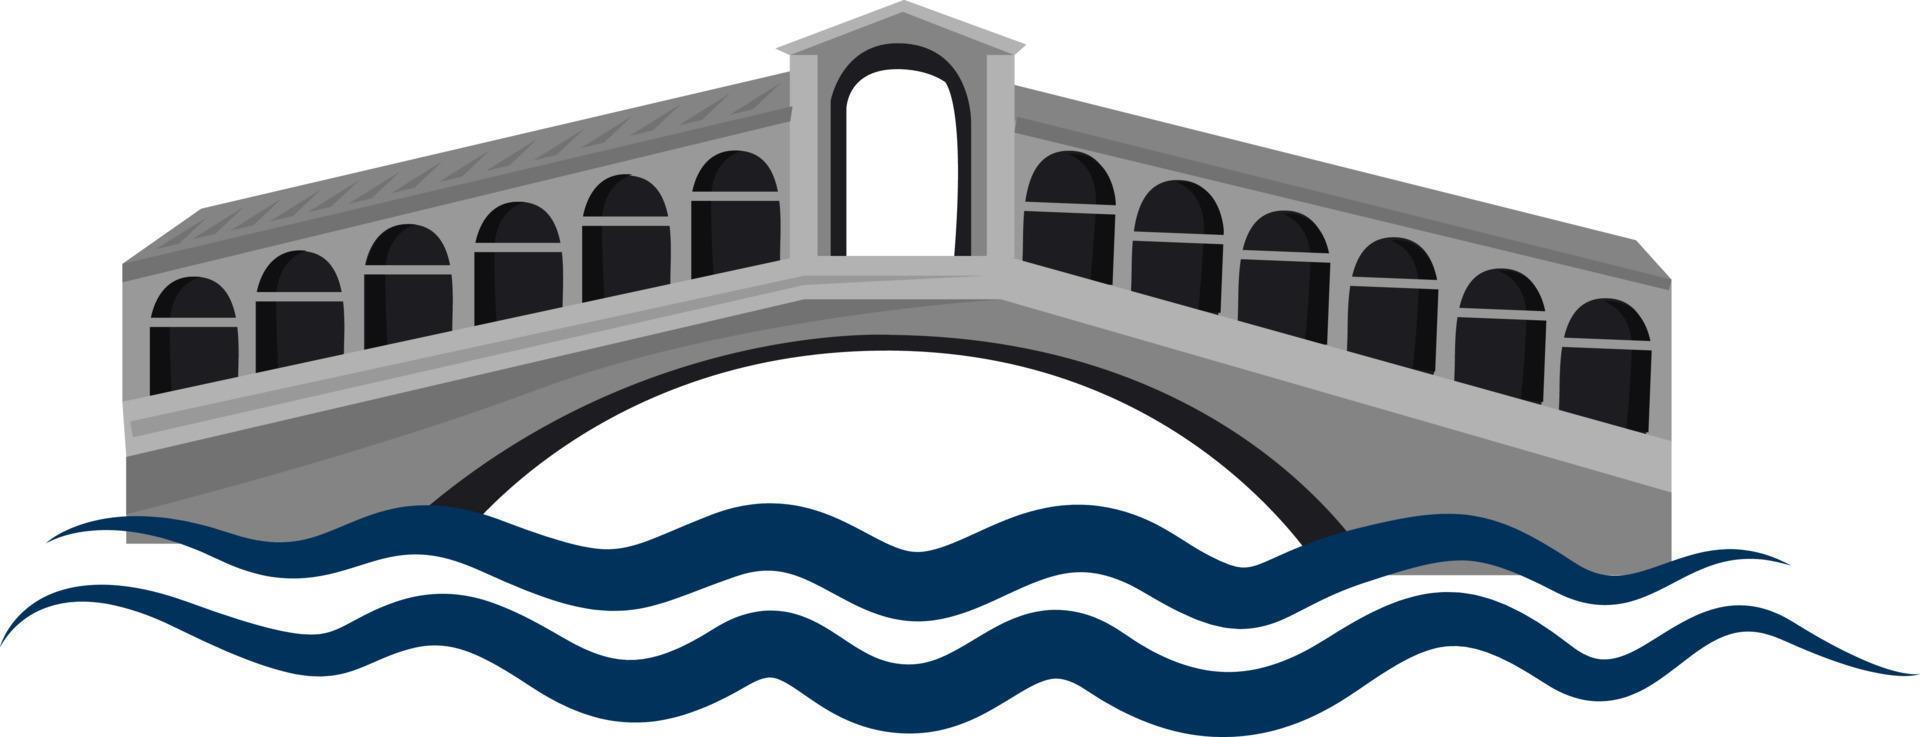 Riatlo bridge, illustration, vector on white background.